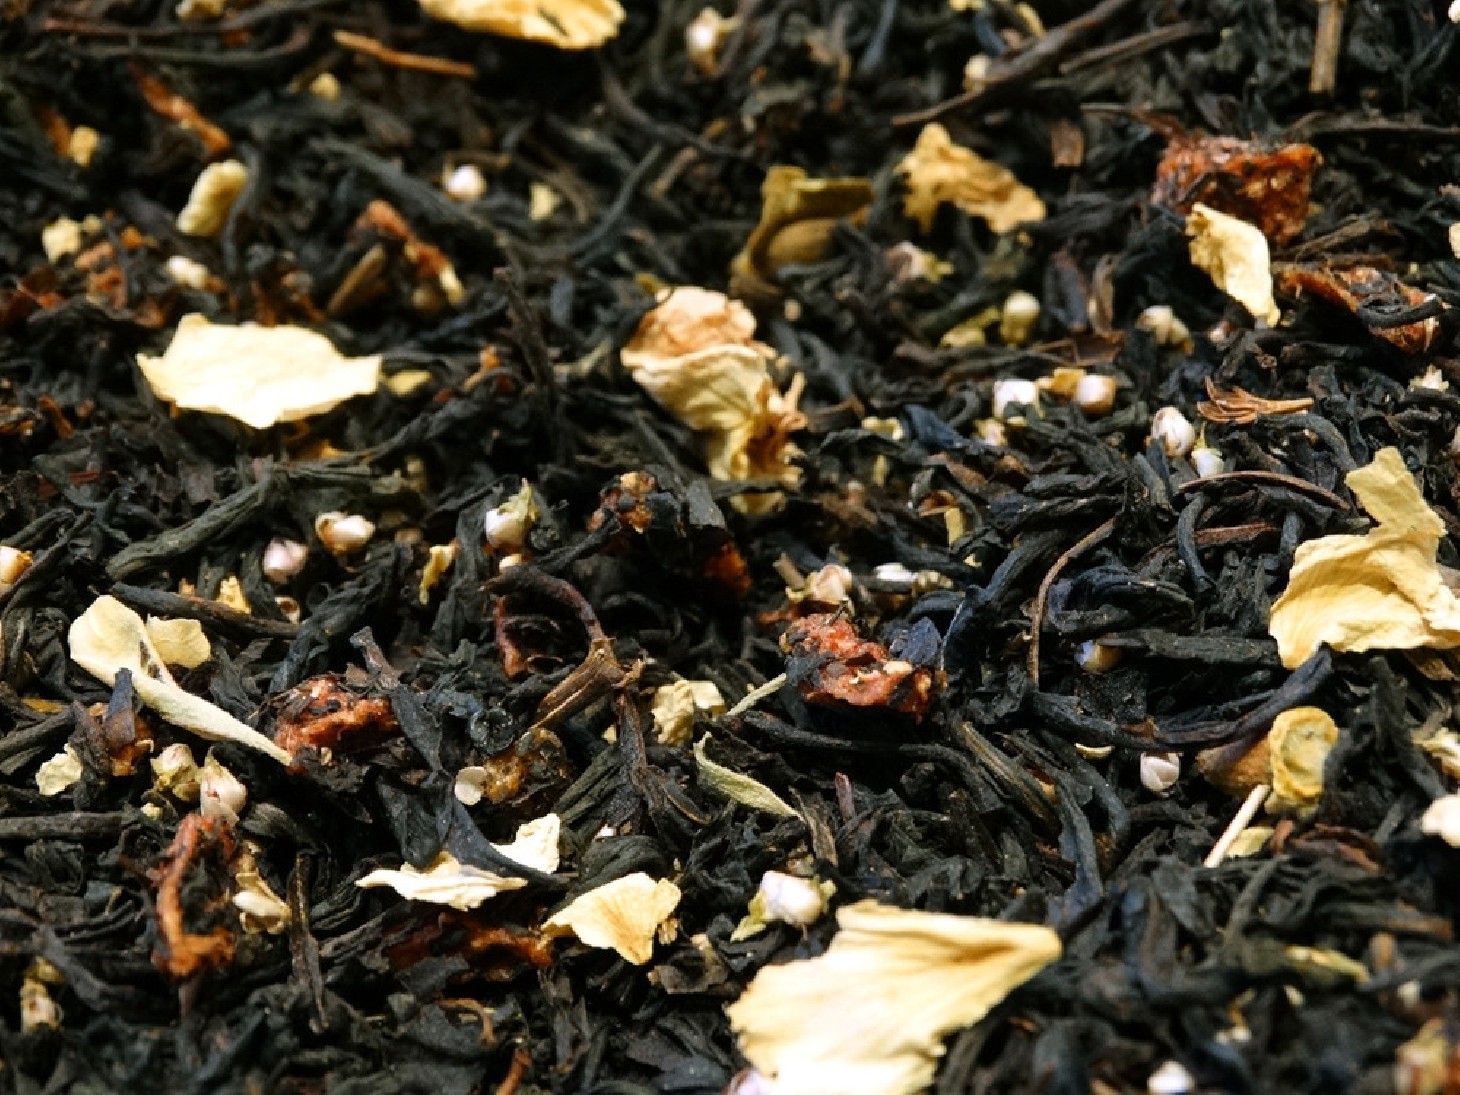 Flavoured black tea, raspberry pieces